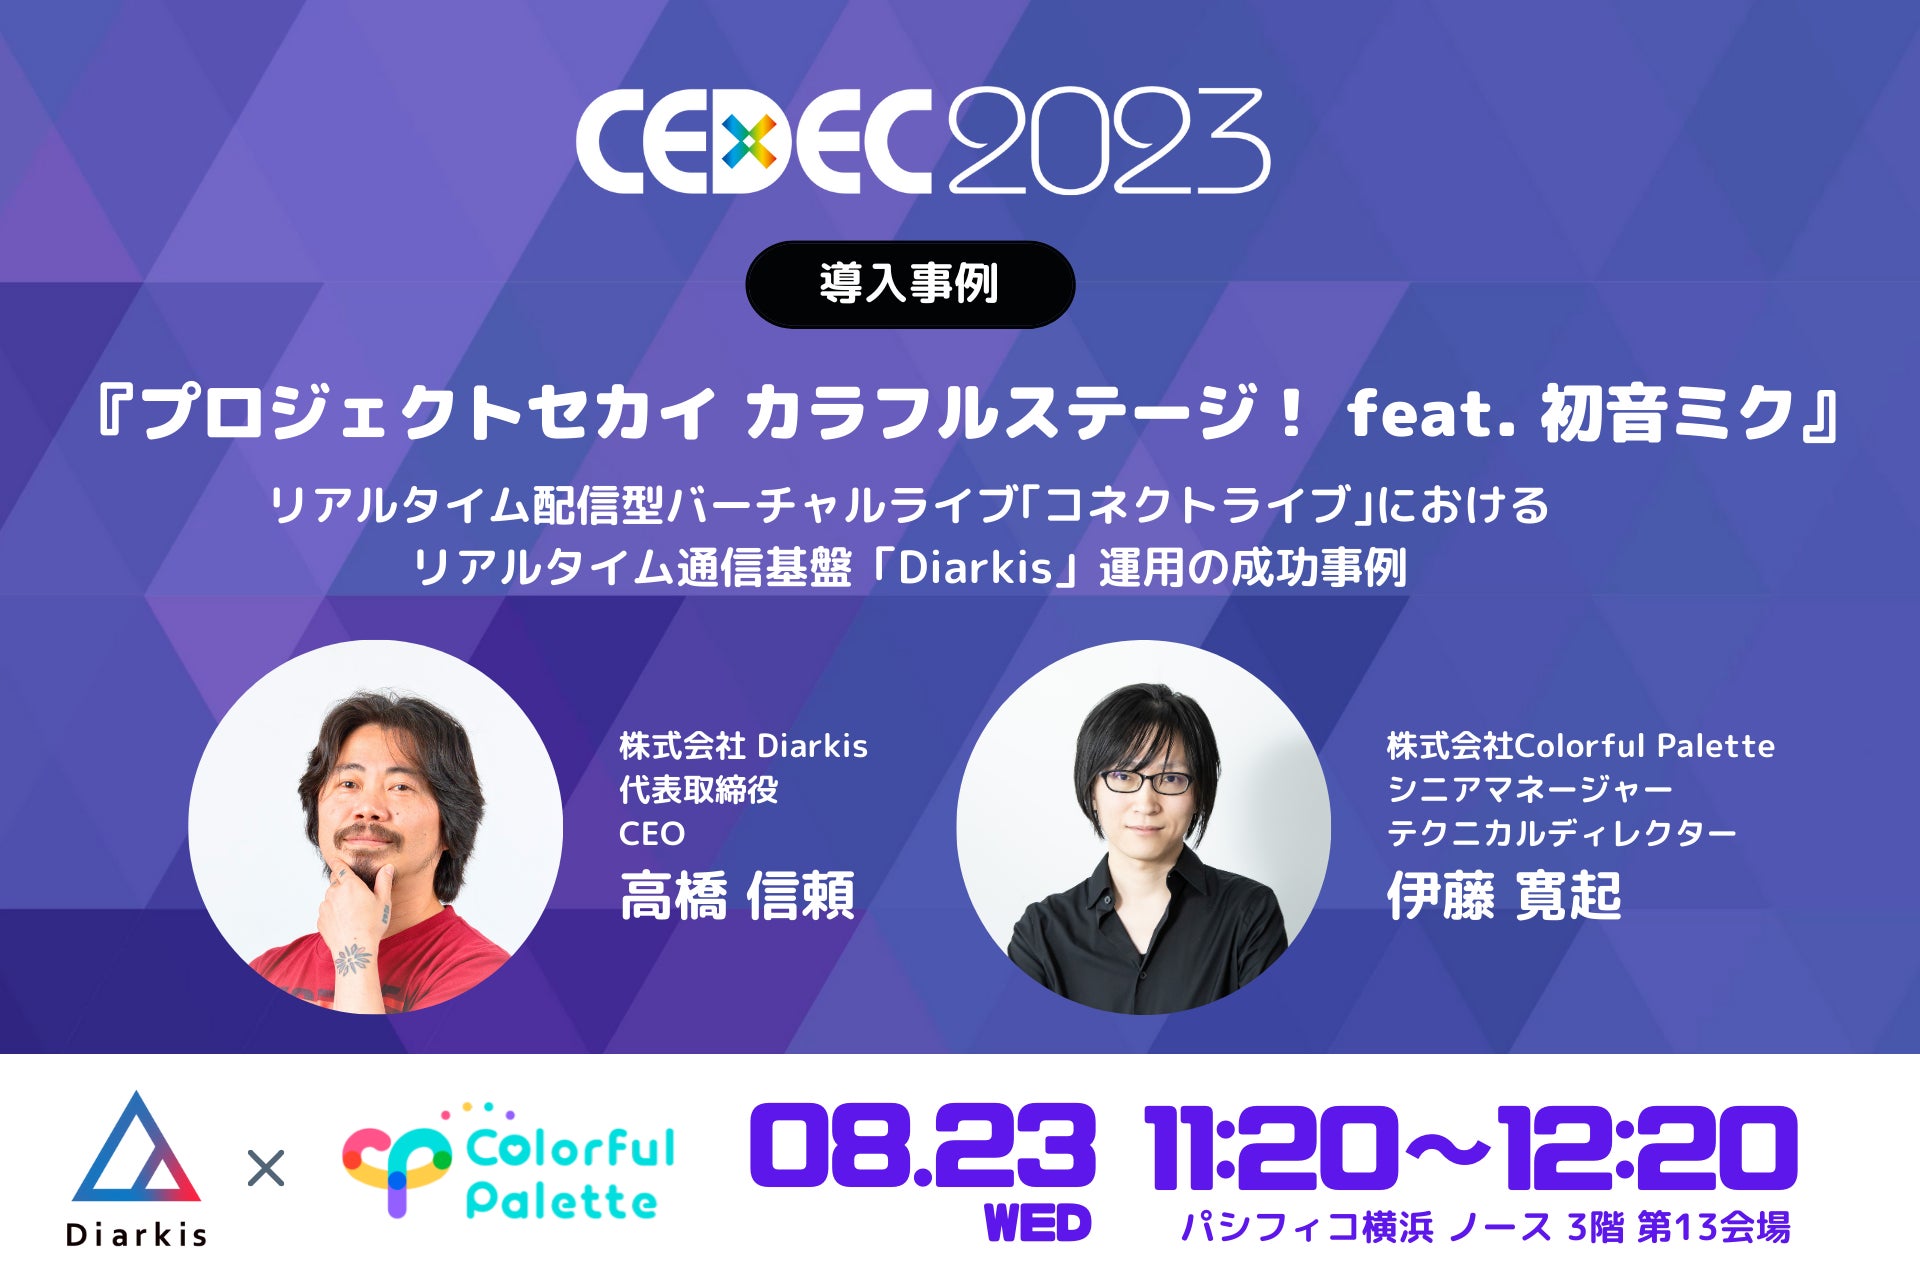 【Diarkis】CEDEC2023 スポンサーセッションに登壇・出展